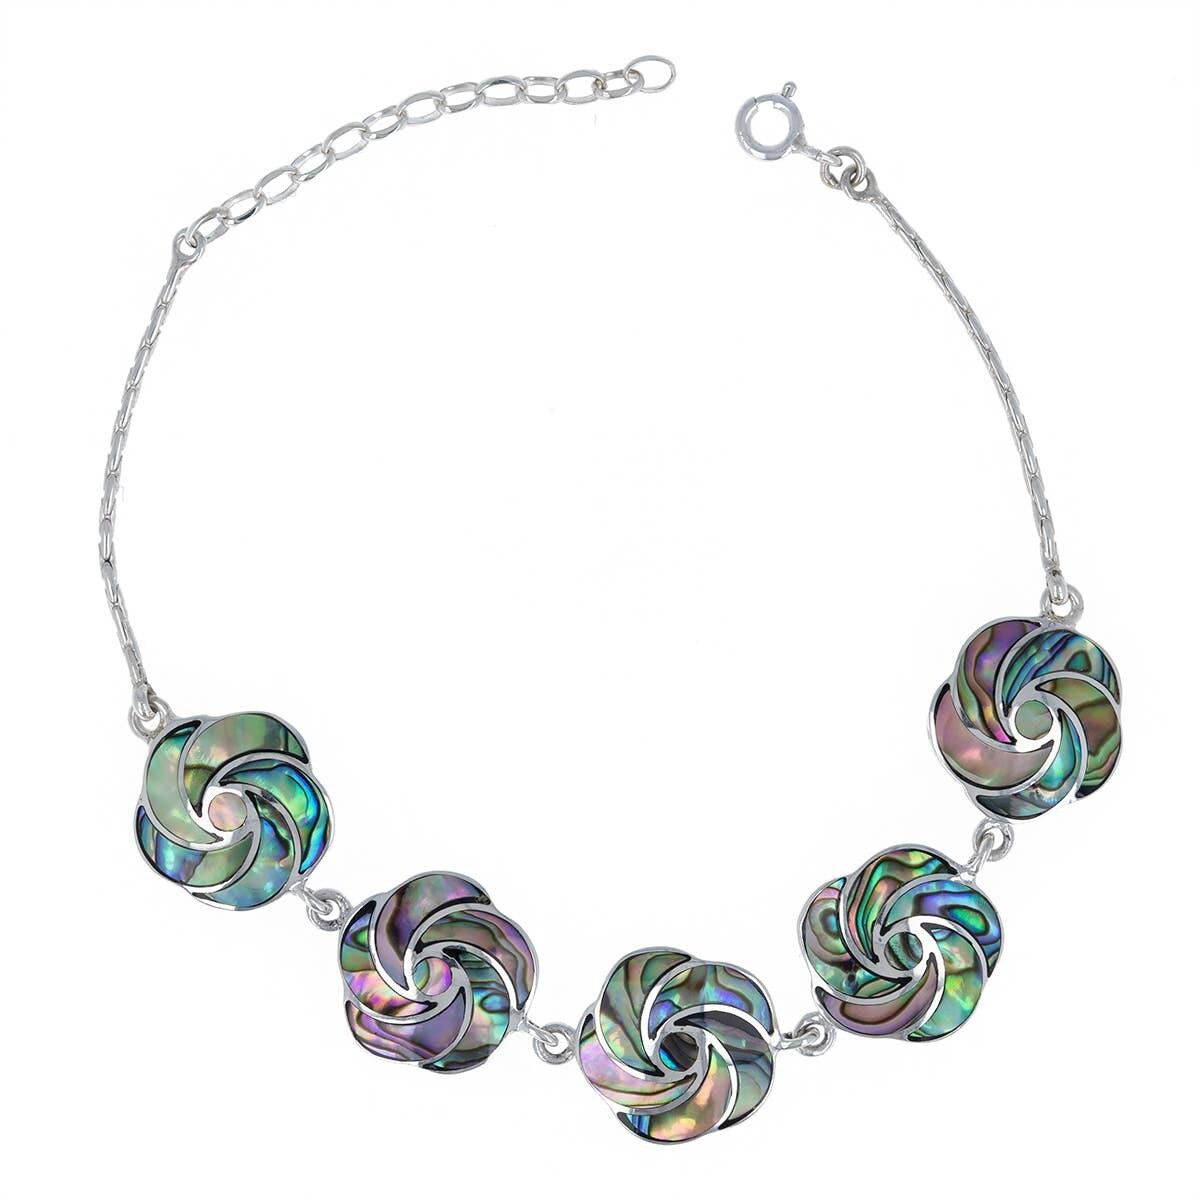 Mother of Pearl Jewelry Flower Bracelet. Silver. Best Selling French Brand, Aden Bijoux.